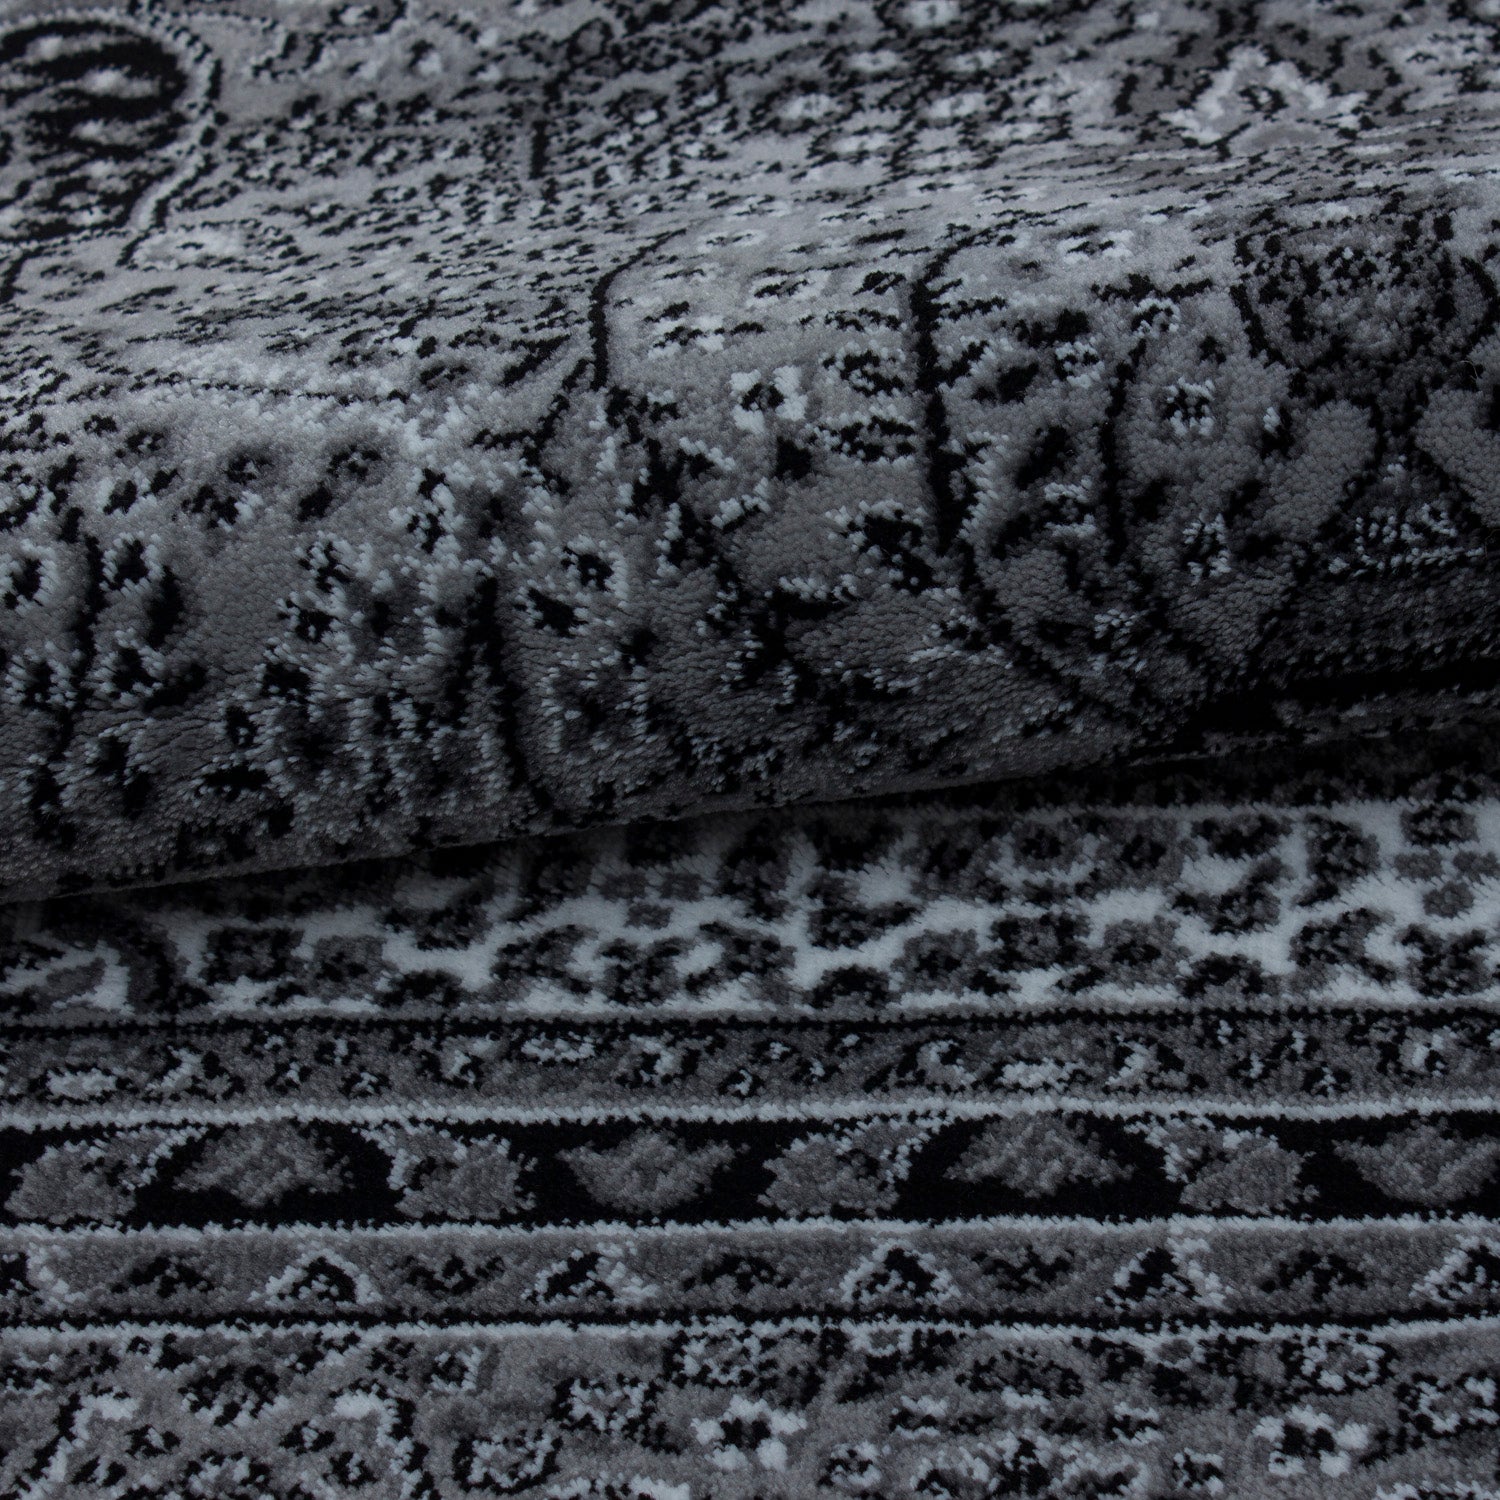 Orient Teppich Bordüre Design Traditionelles Muster Farbe Grau Wohnzimmerteppich